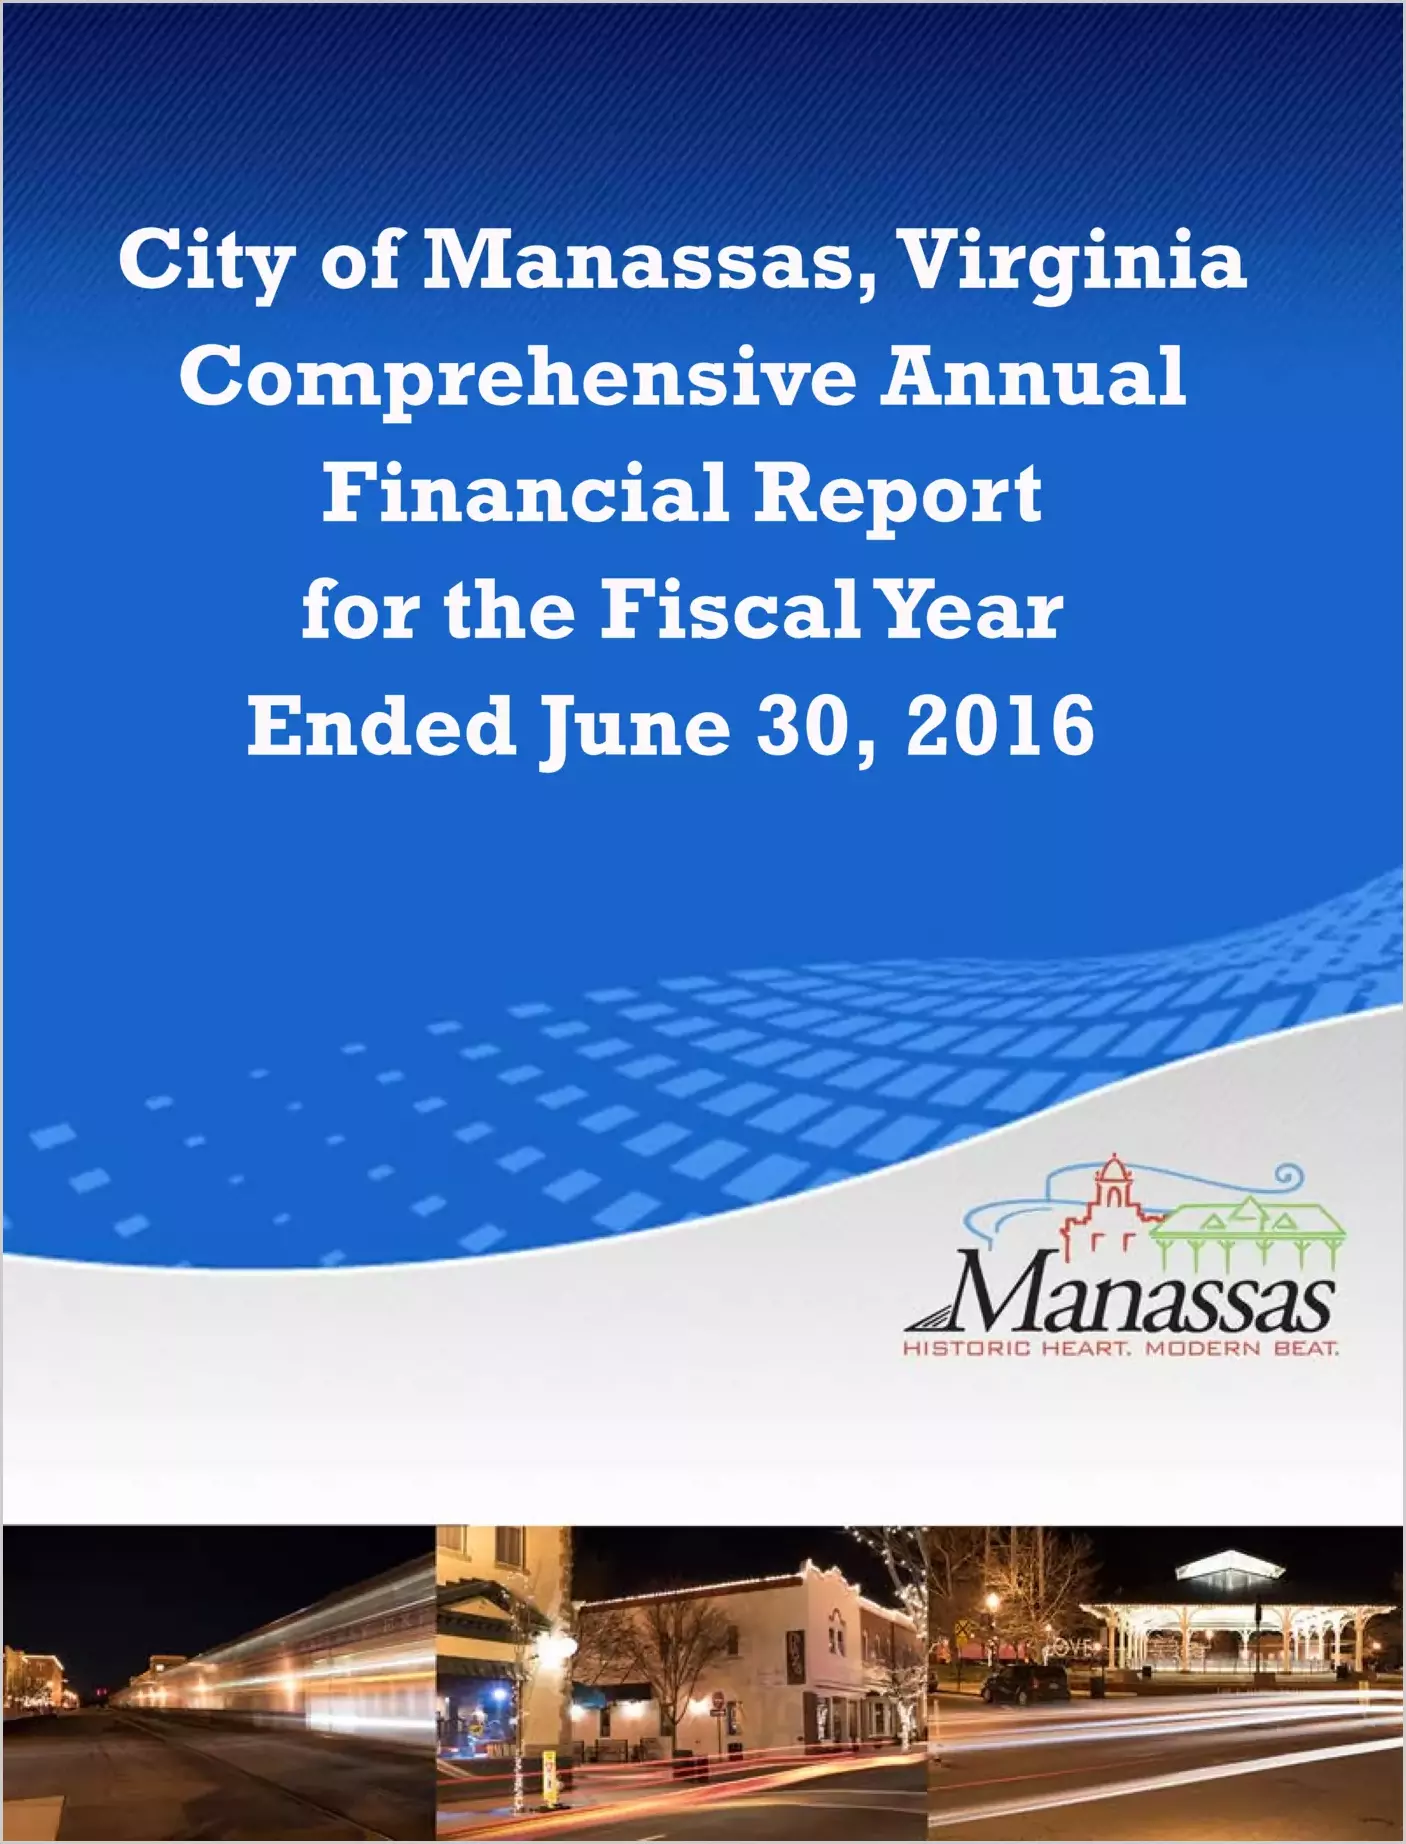 2016 Annual Financial Report for City of Manassas